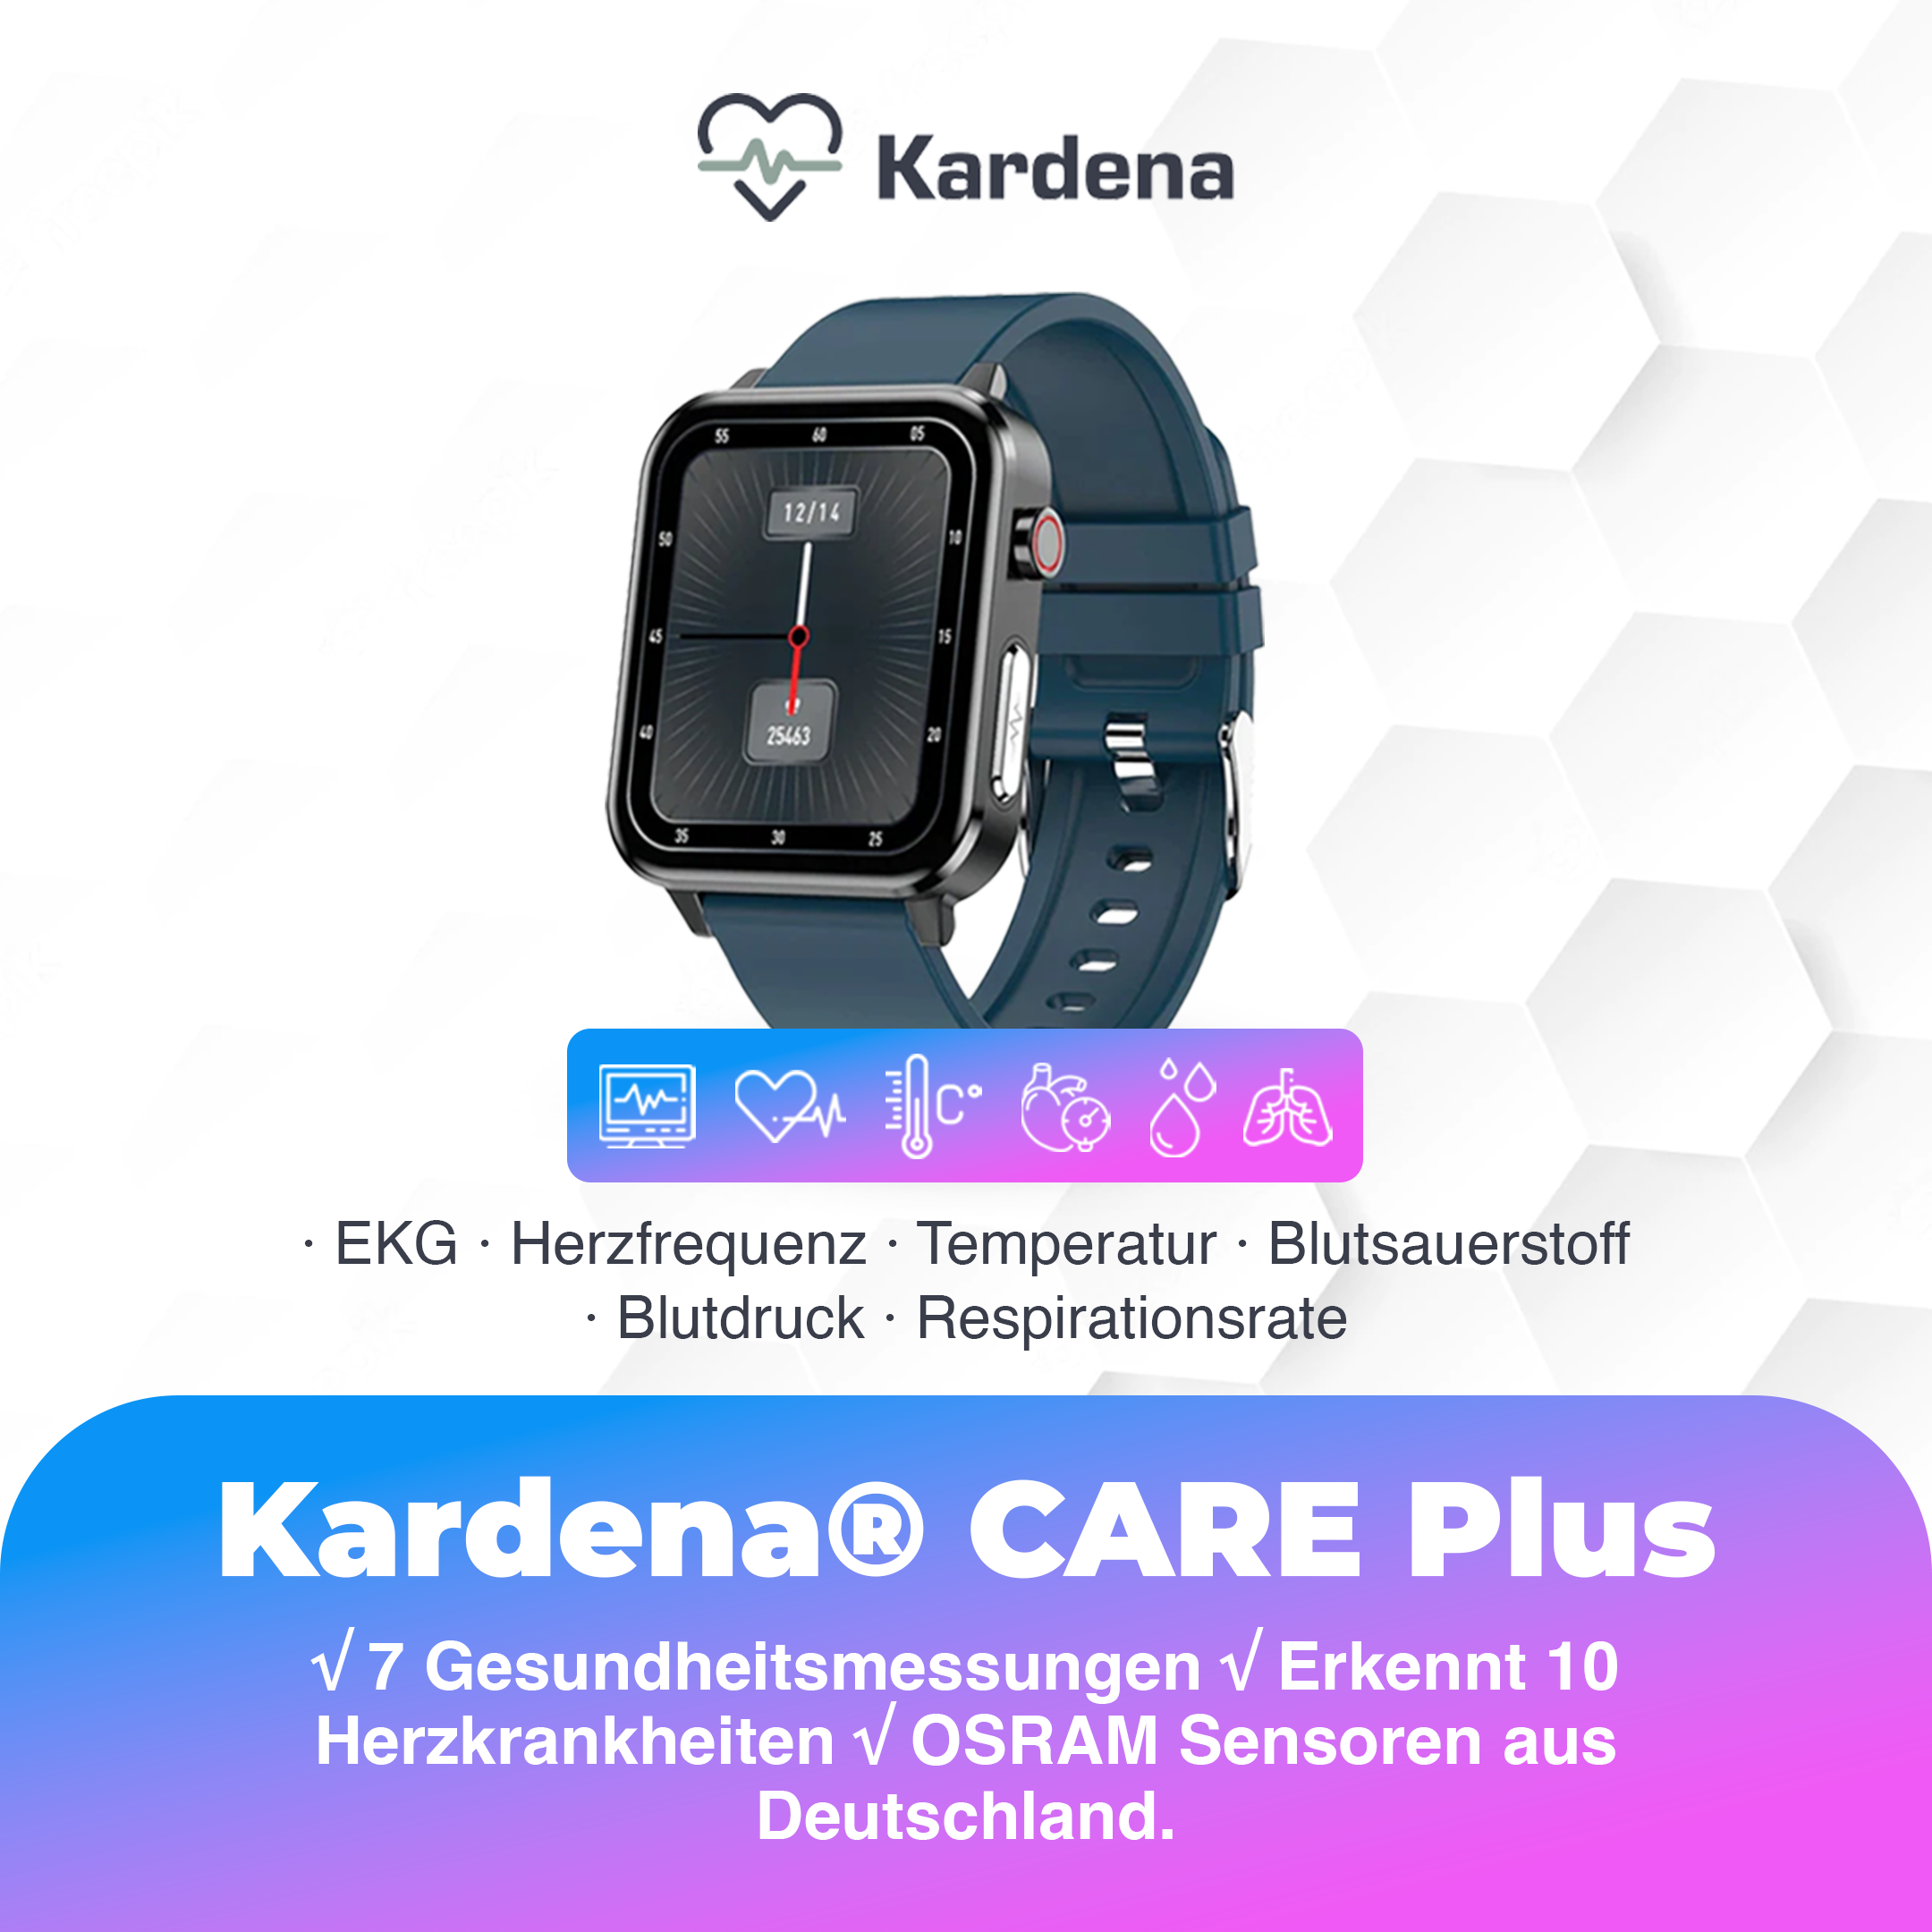 Kardena® CARE Plus